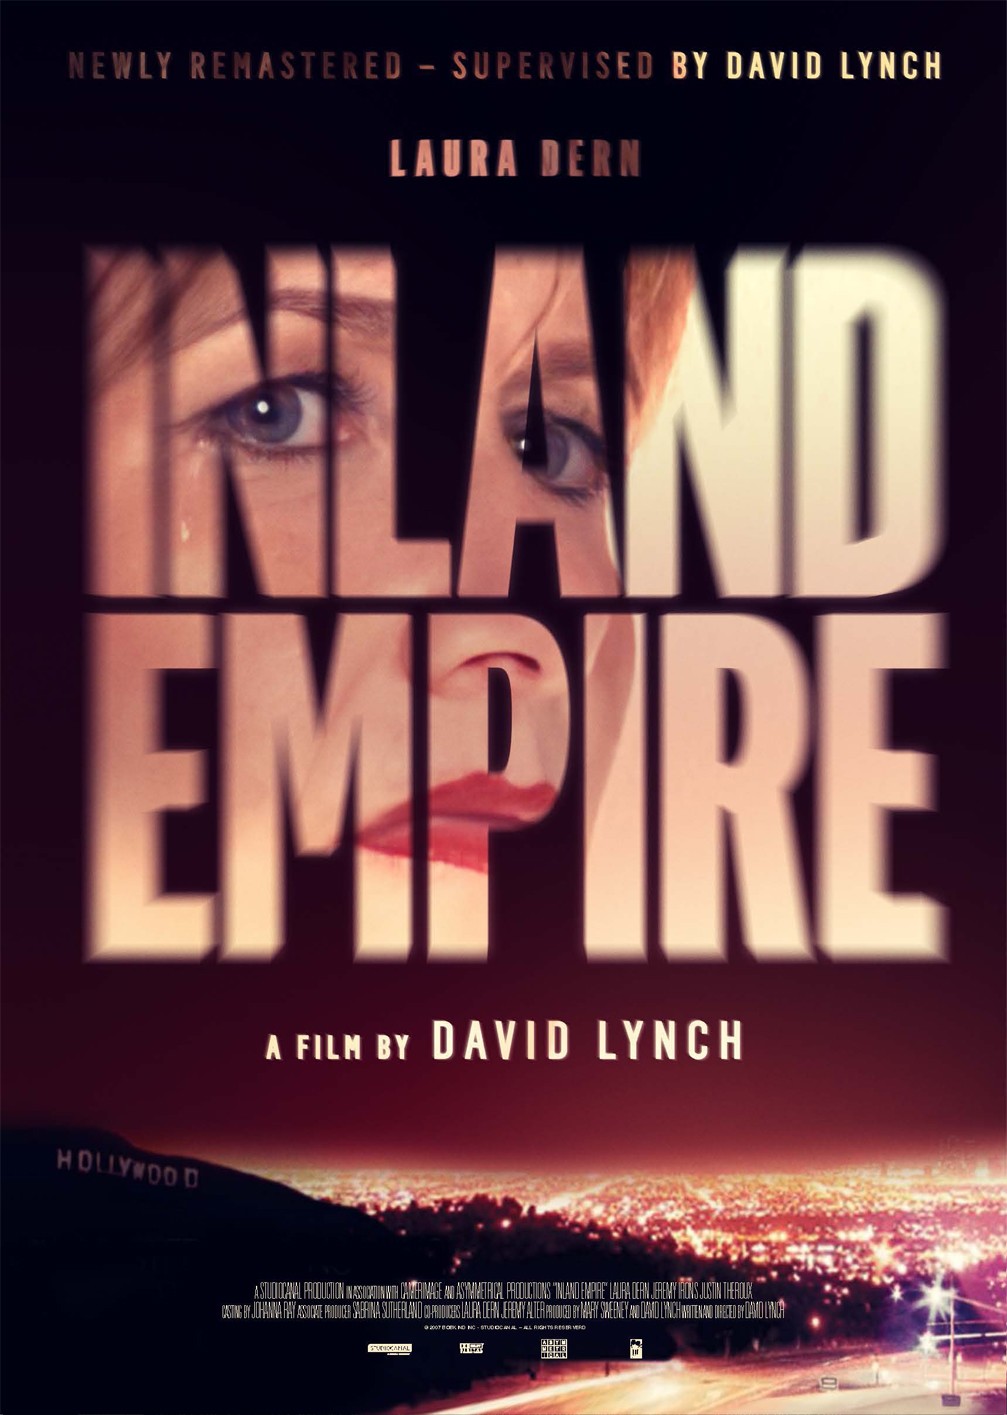 DAVID LYNCH'S 'INLAND EMPIRE' (New Restoration)